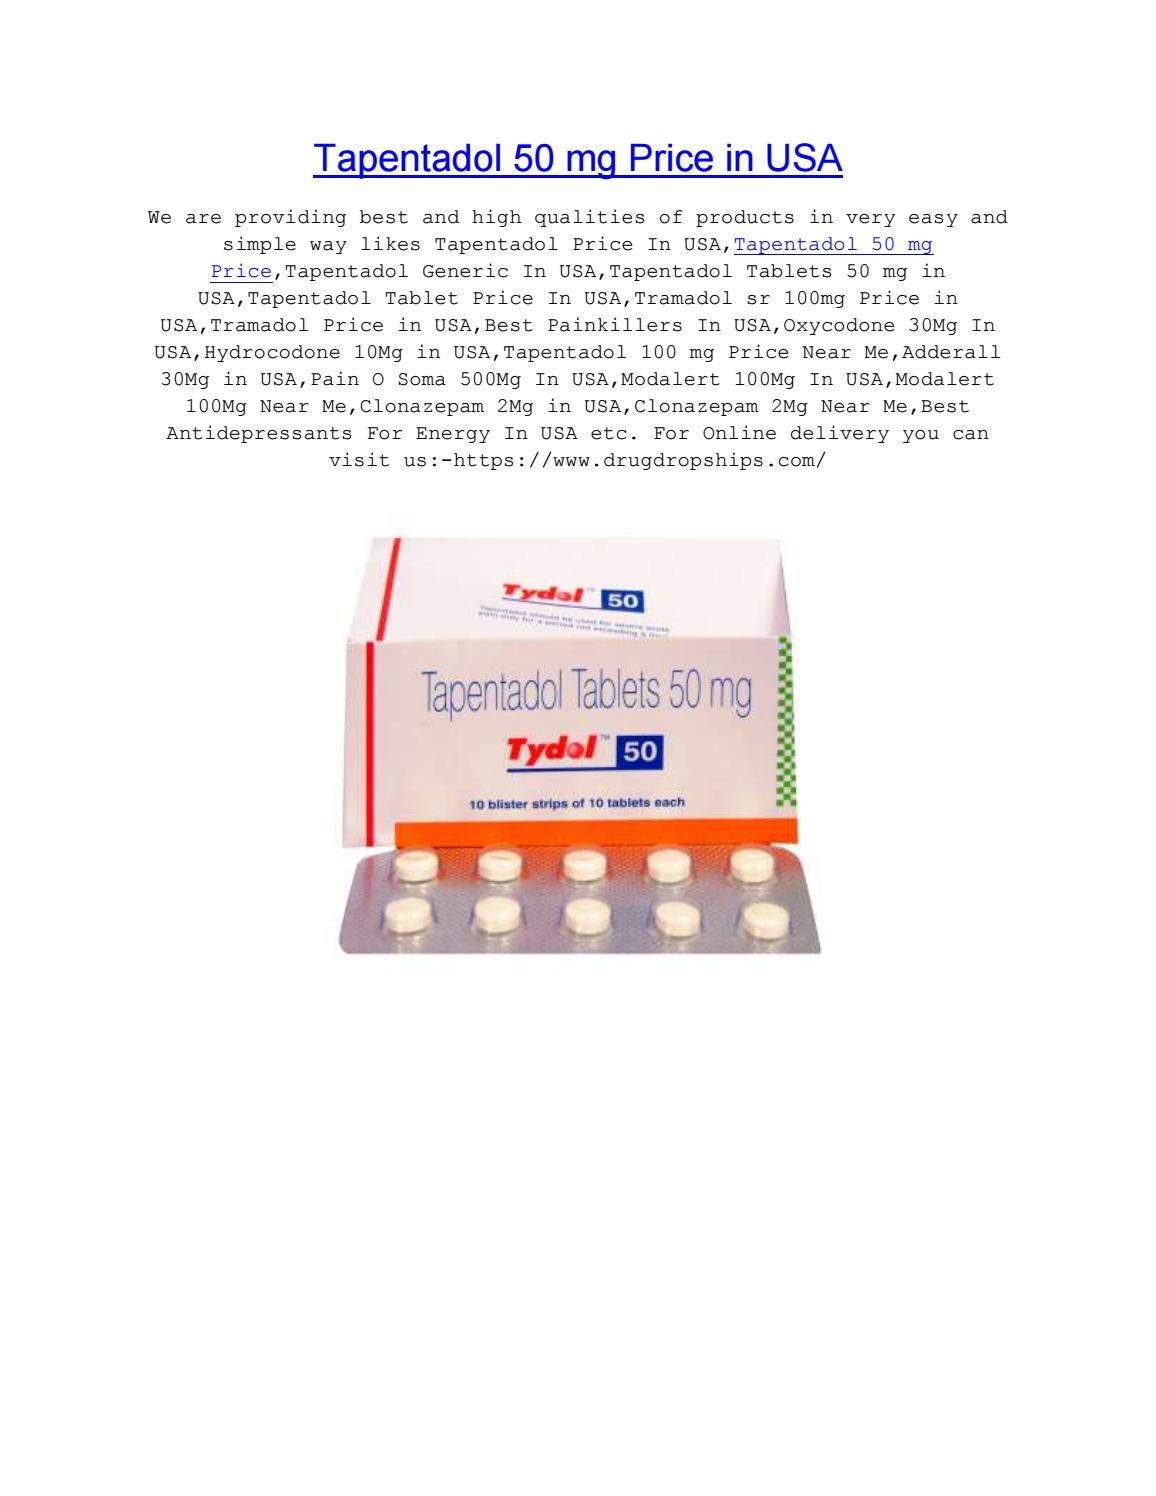 Tapentadol tablets 50 mg price